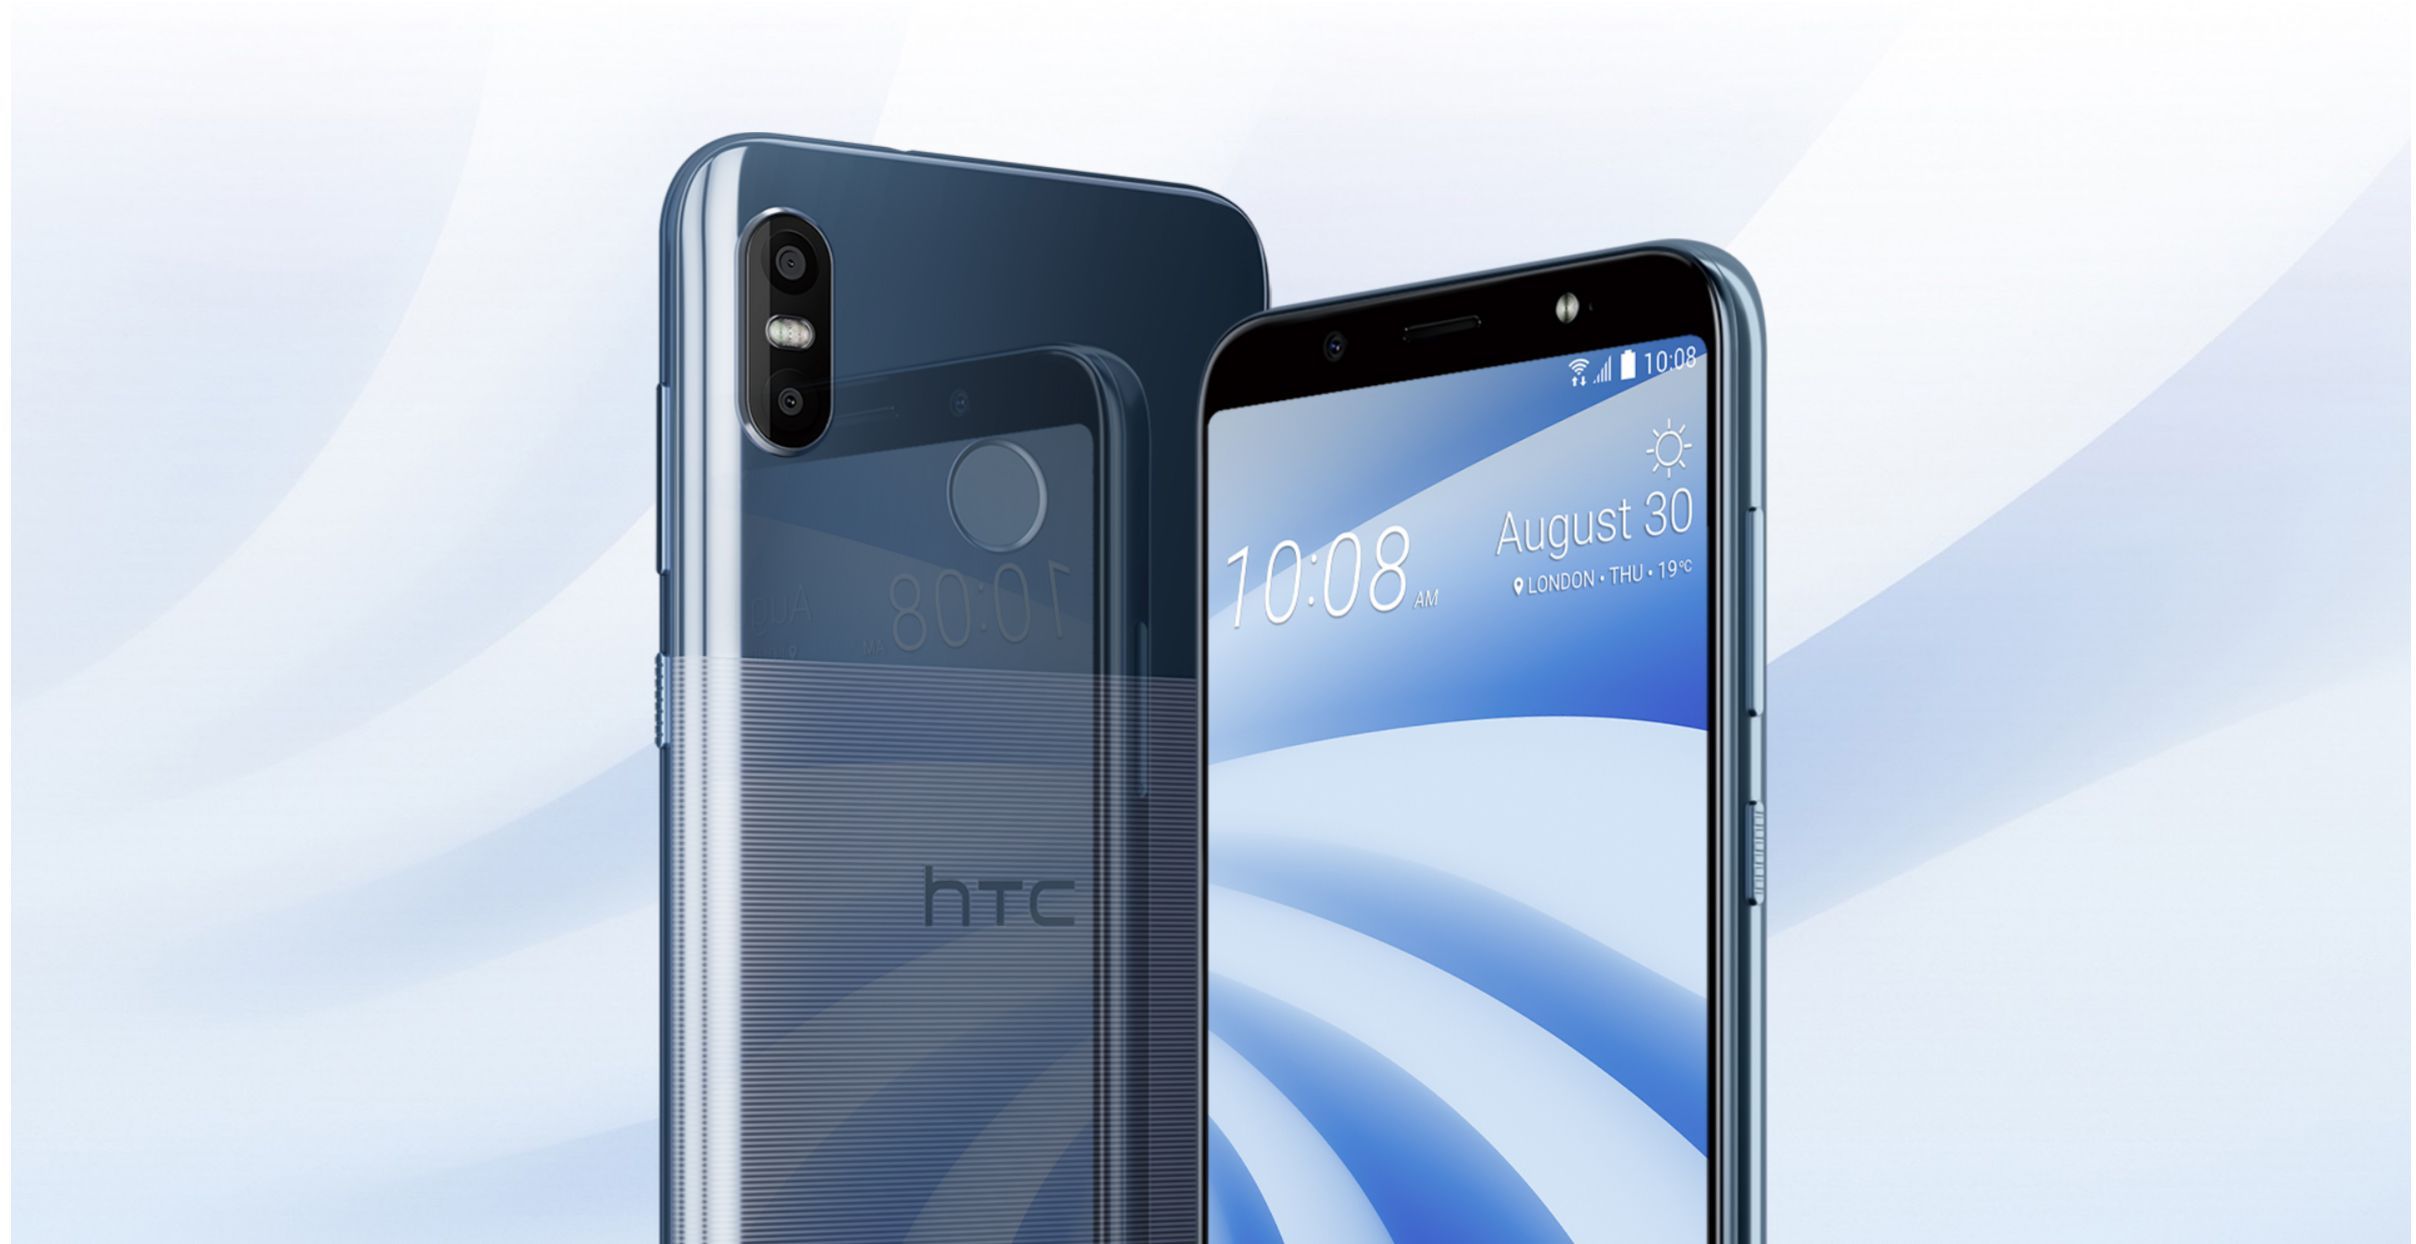 Снимок экрана: два смартфона HTC U12 Life: один вид сзади и один спереди